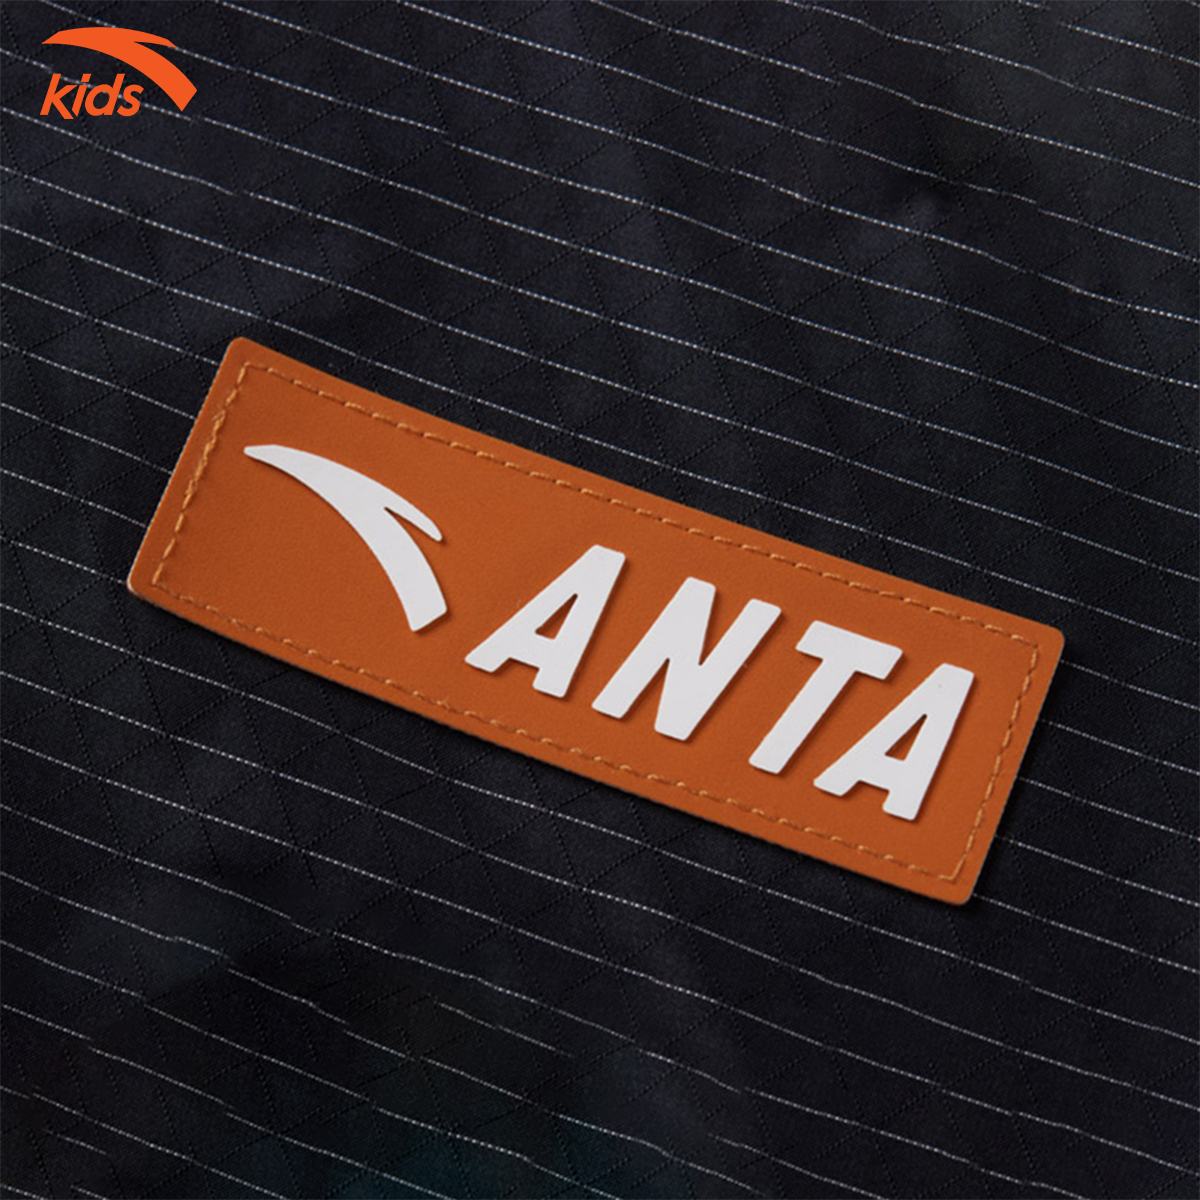 Áo nỉ thời trang bé trai Anta Kids cổ cao khóa zip, chất nỉ da cá 352246706